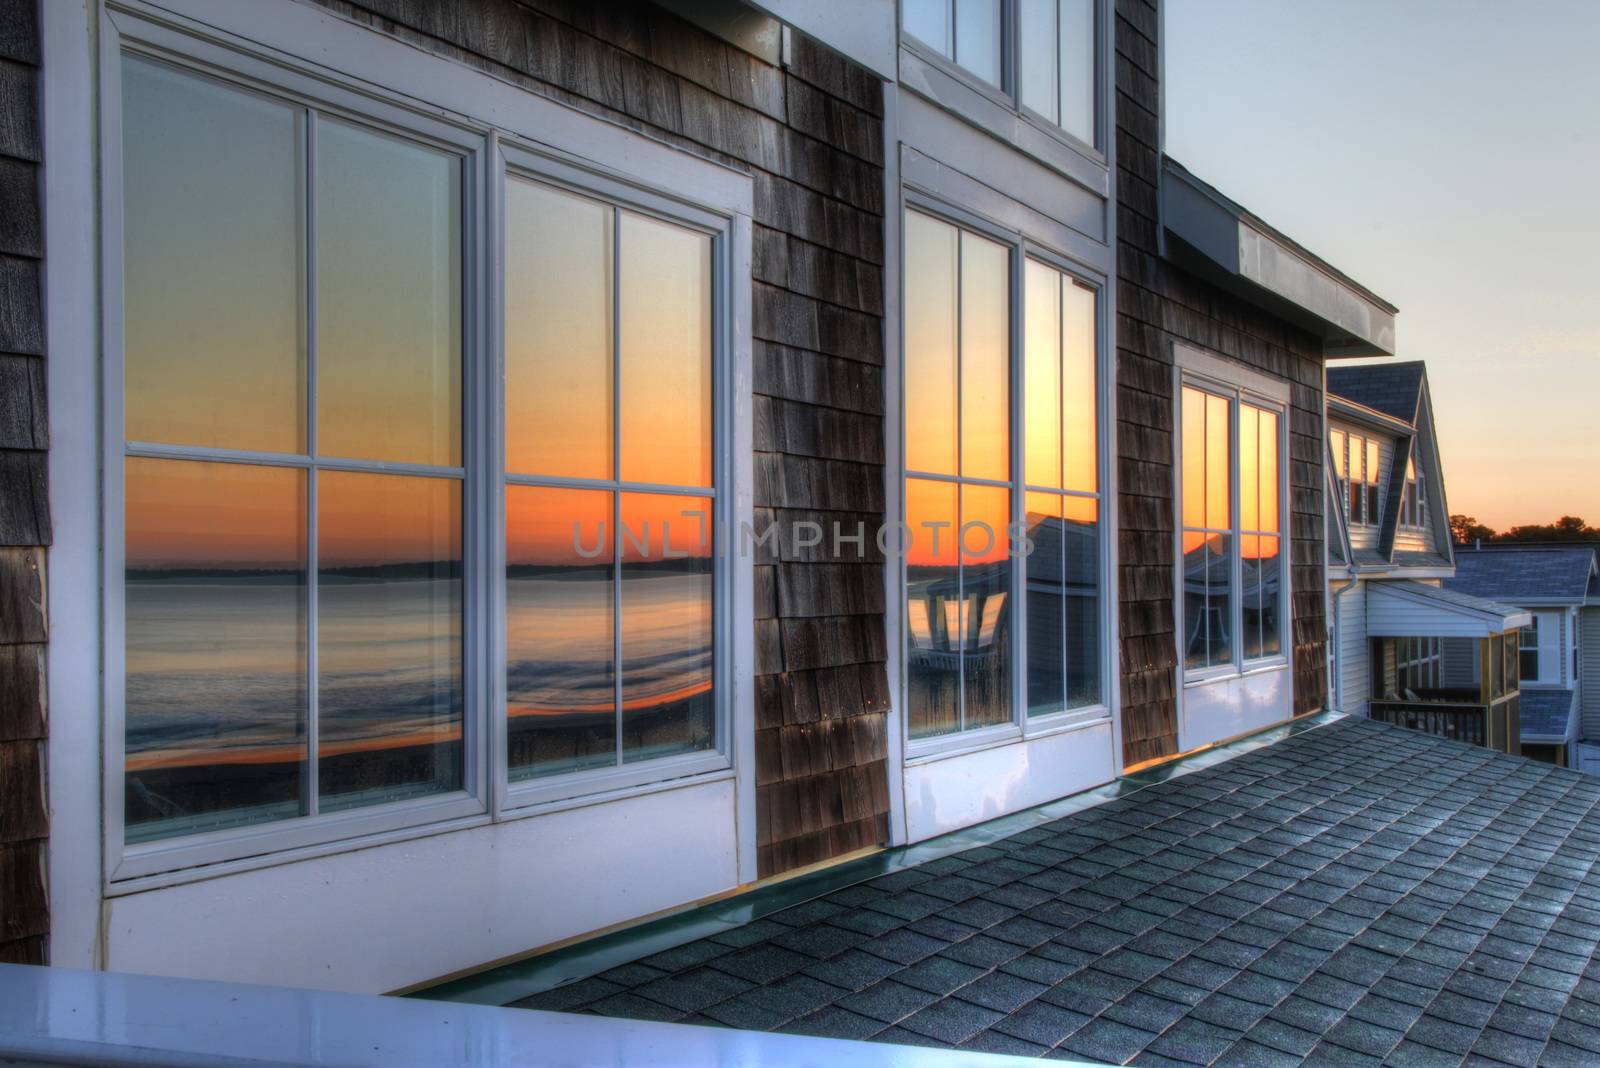 reflection of sunrise through window of a seashore property